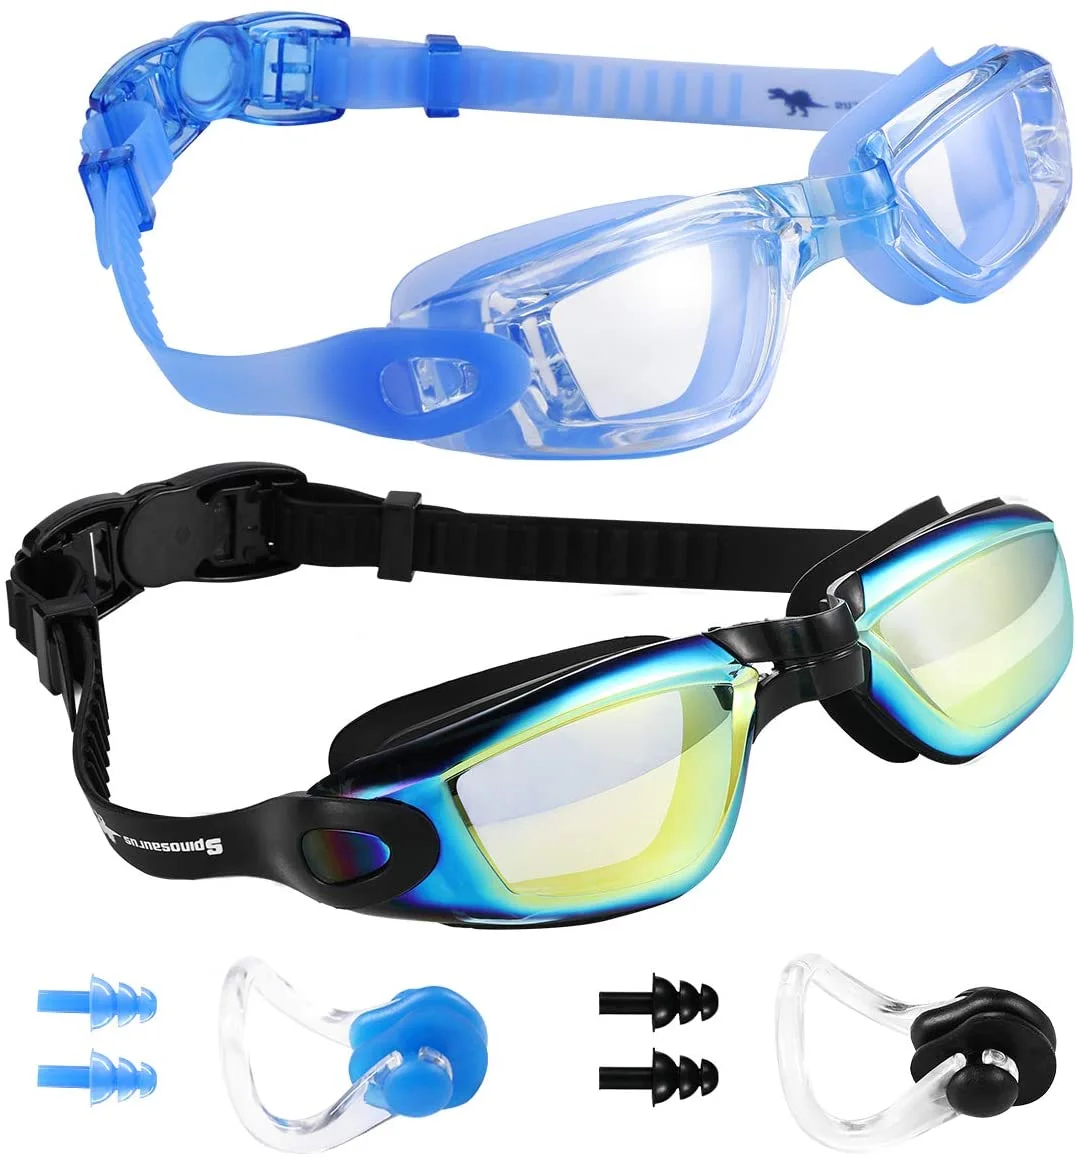 Swim Goggles Swimming Goggles, Pack of 2 Professional Anti Fog No Leaking UV Protection Swim Goggles